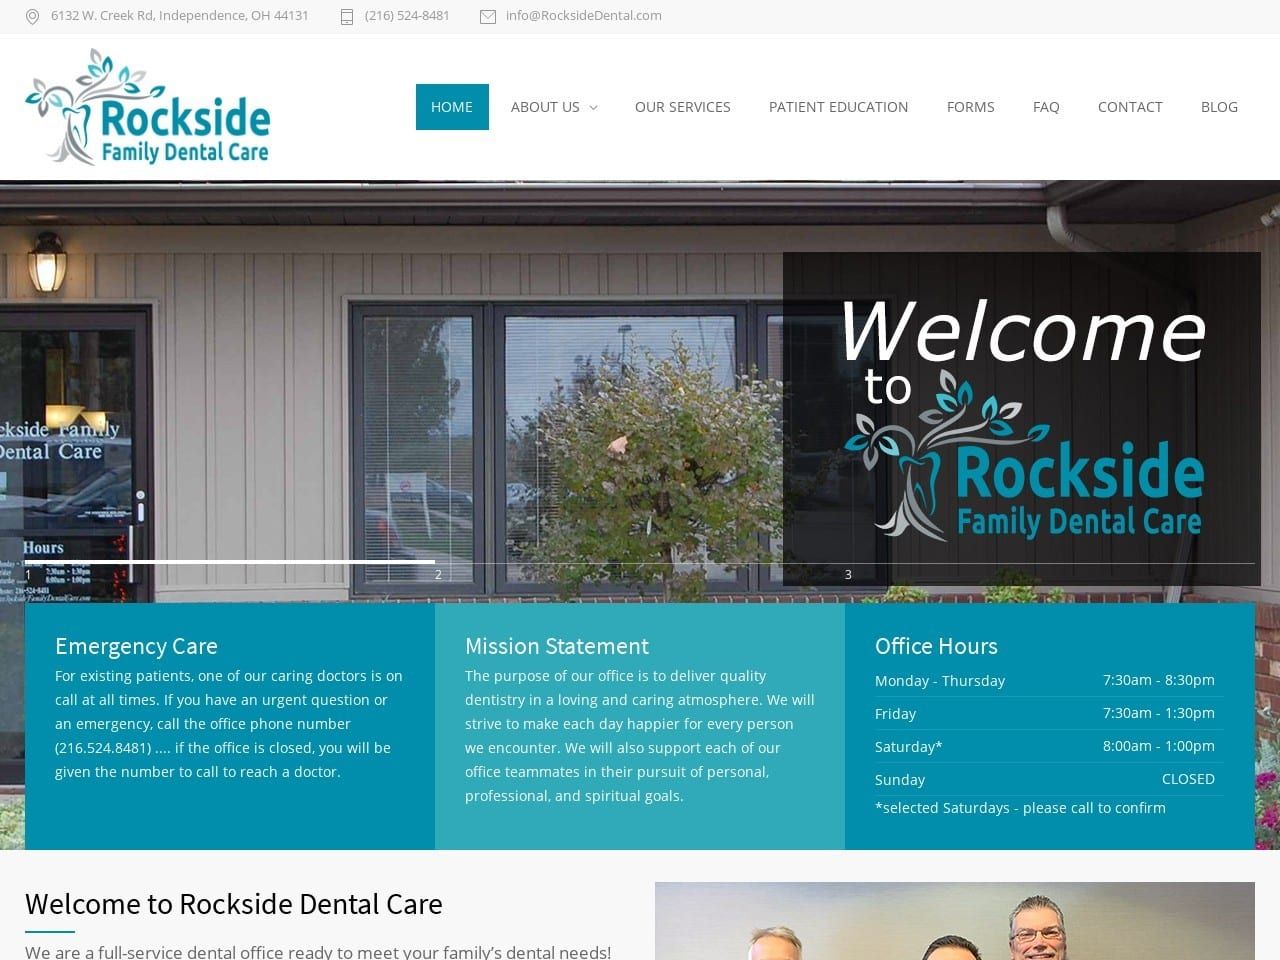 Rockside Family Dental Care Website Screenshot from rocksidefamilydentalcare.com